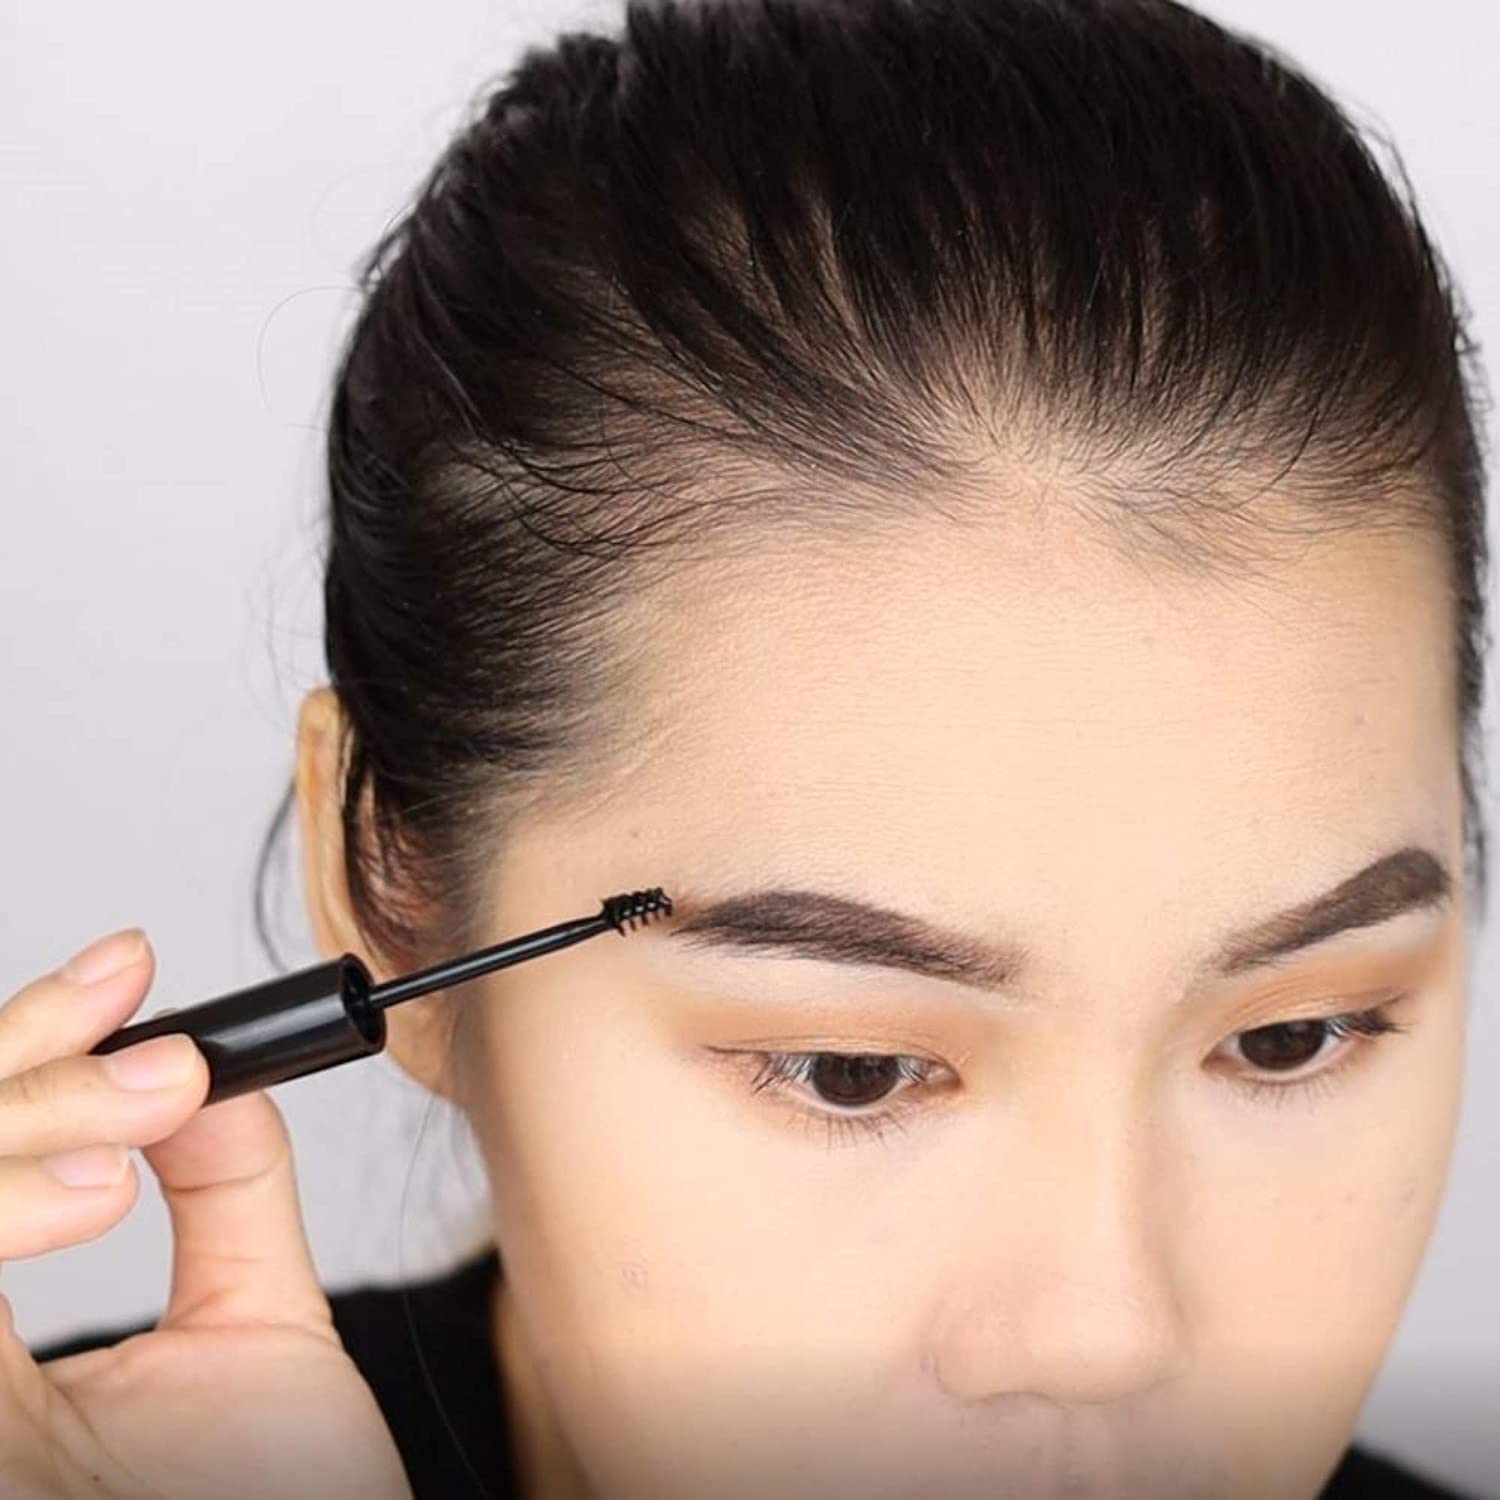 How to Apply Eyebrow Powder